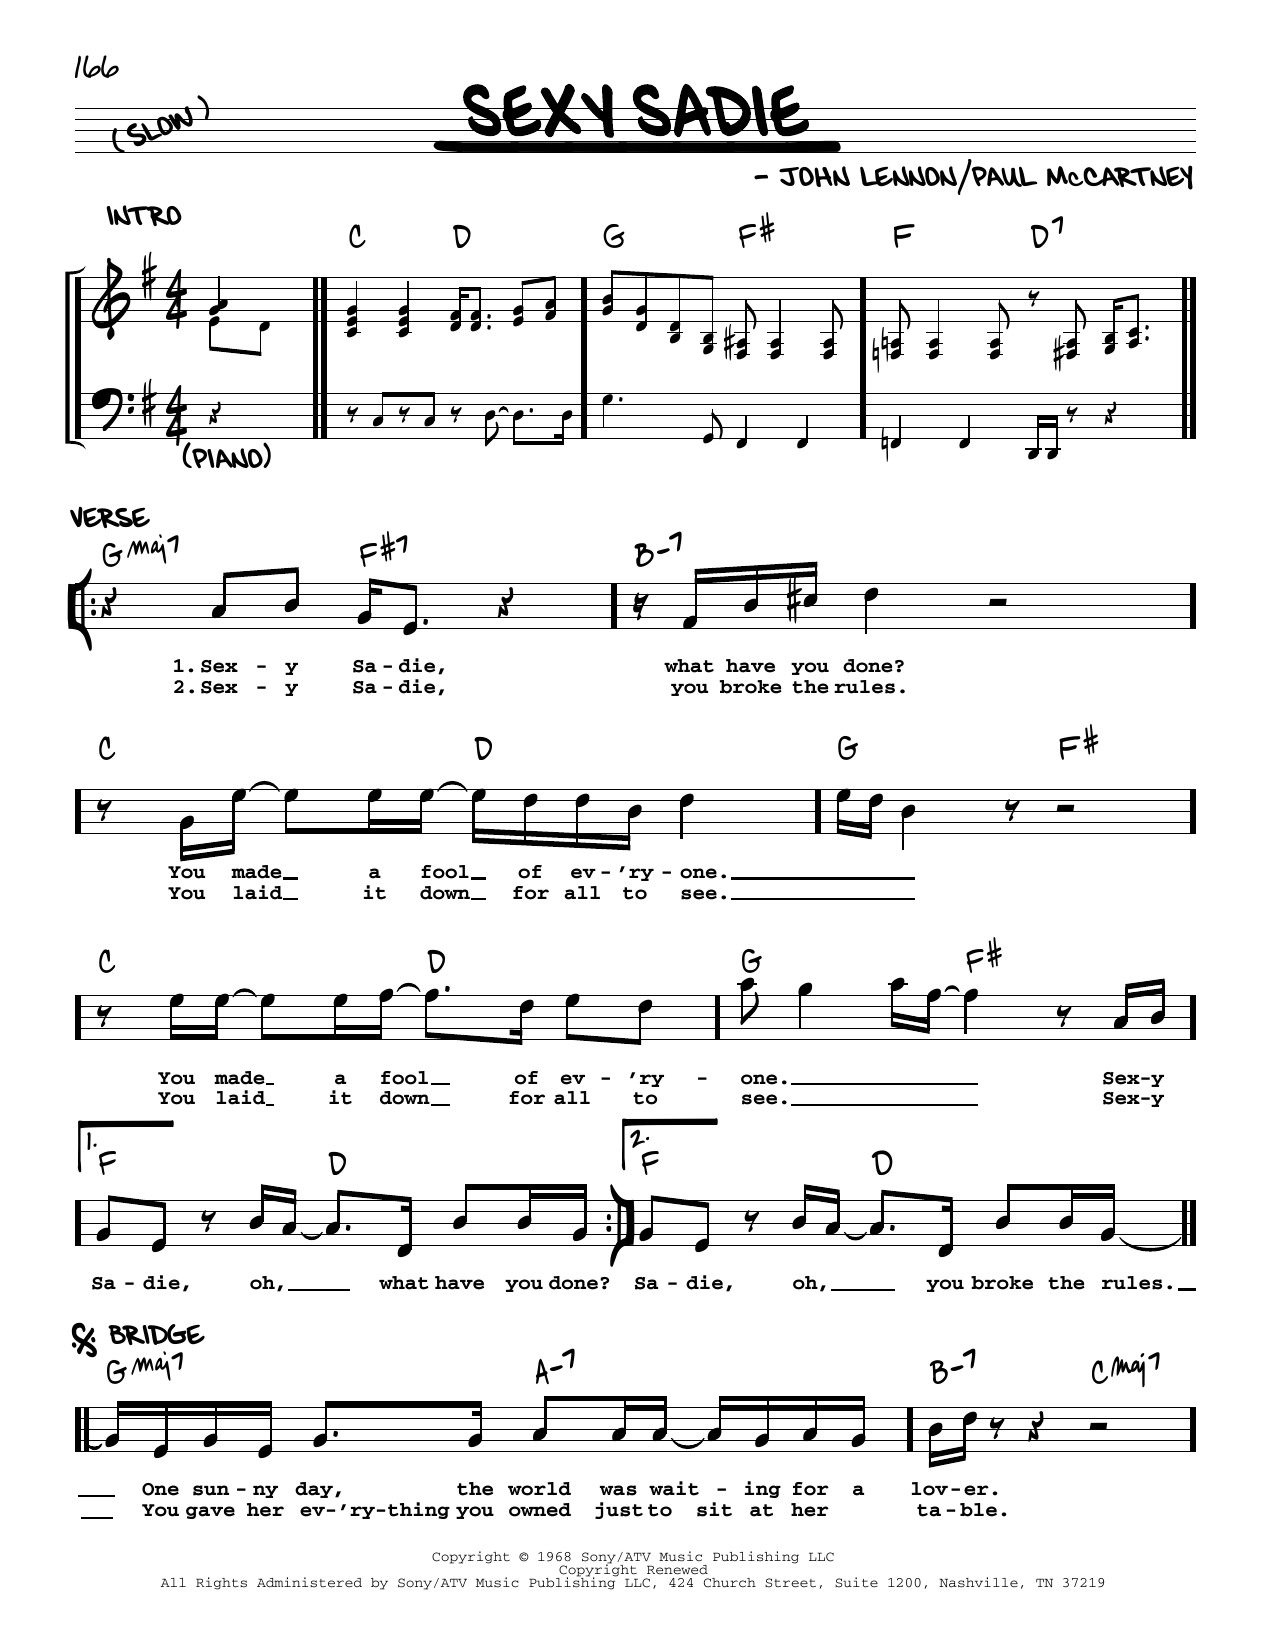 The Beatles Sexy Sadie [Jazz version] Sheet Music Notes & Chords for Real Book – Melody, Lyrics & Chords - Download or Print PDF